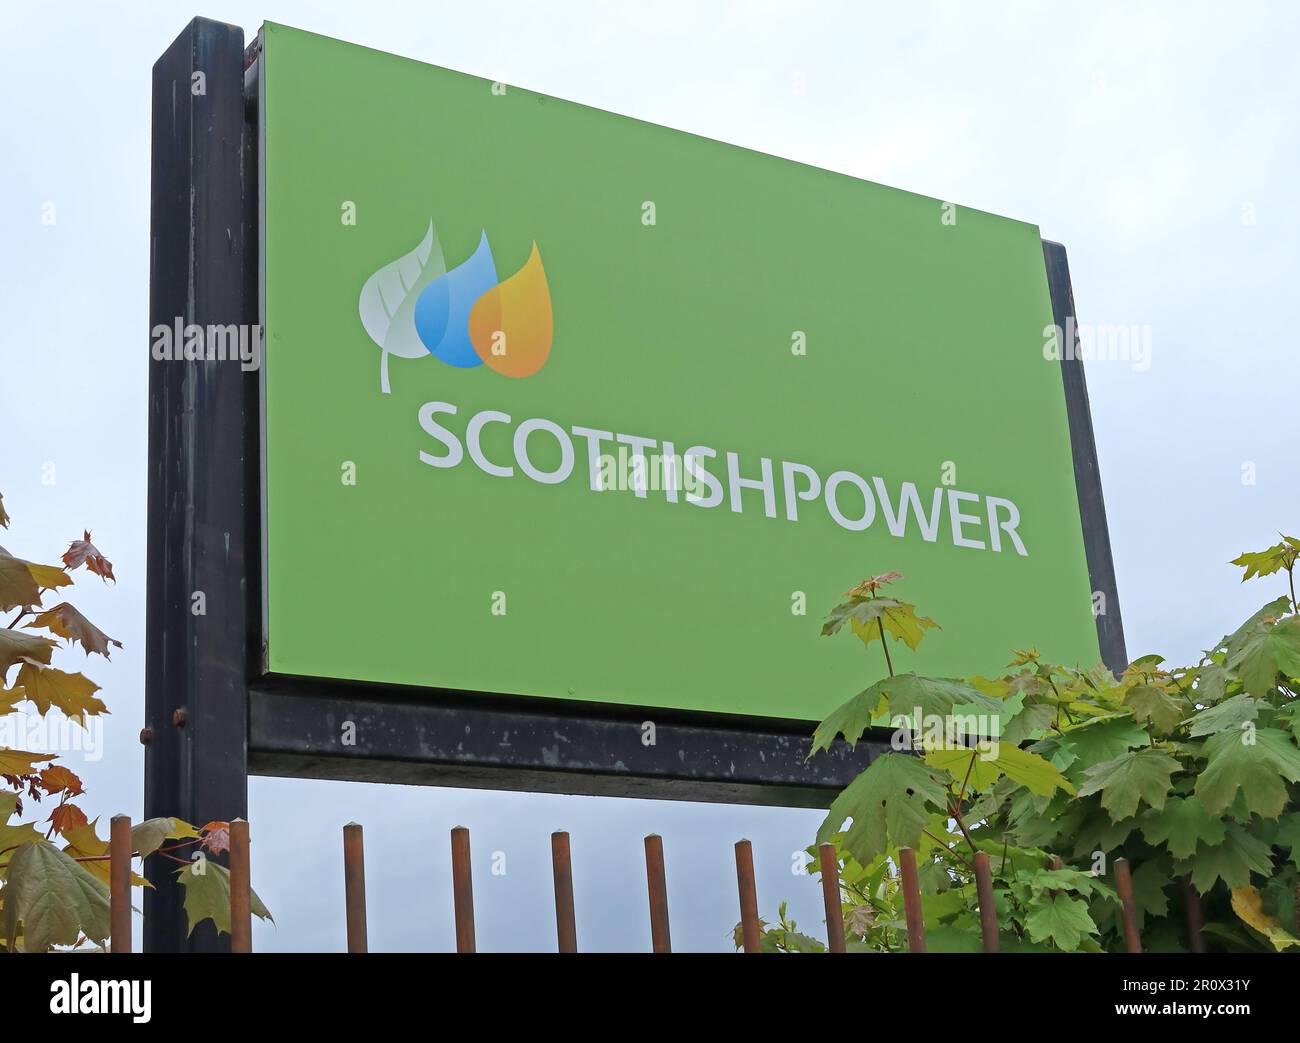 ScottishPower – Scottish Power Power Power Power Power Power Power Power Power Power, Wilderspool Causeway, Warrington, Cheshire, England, UK, WA4 6QD Stockfoto